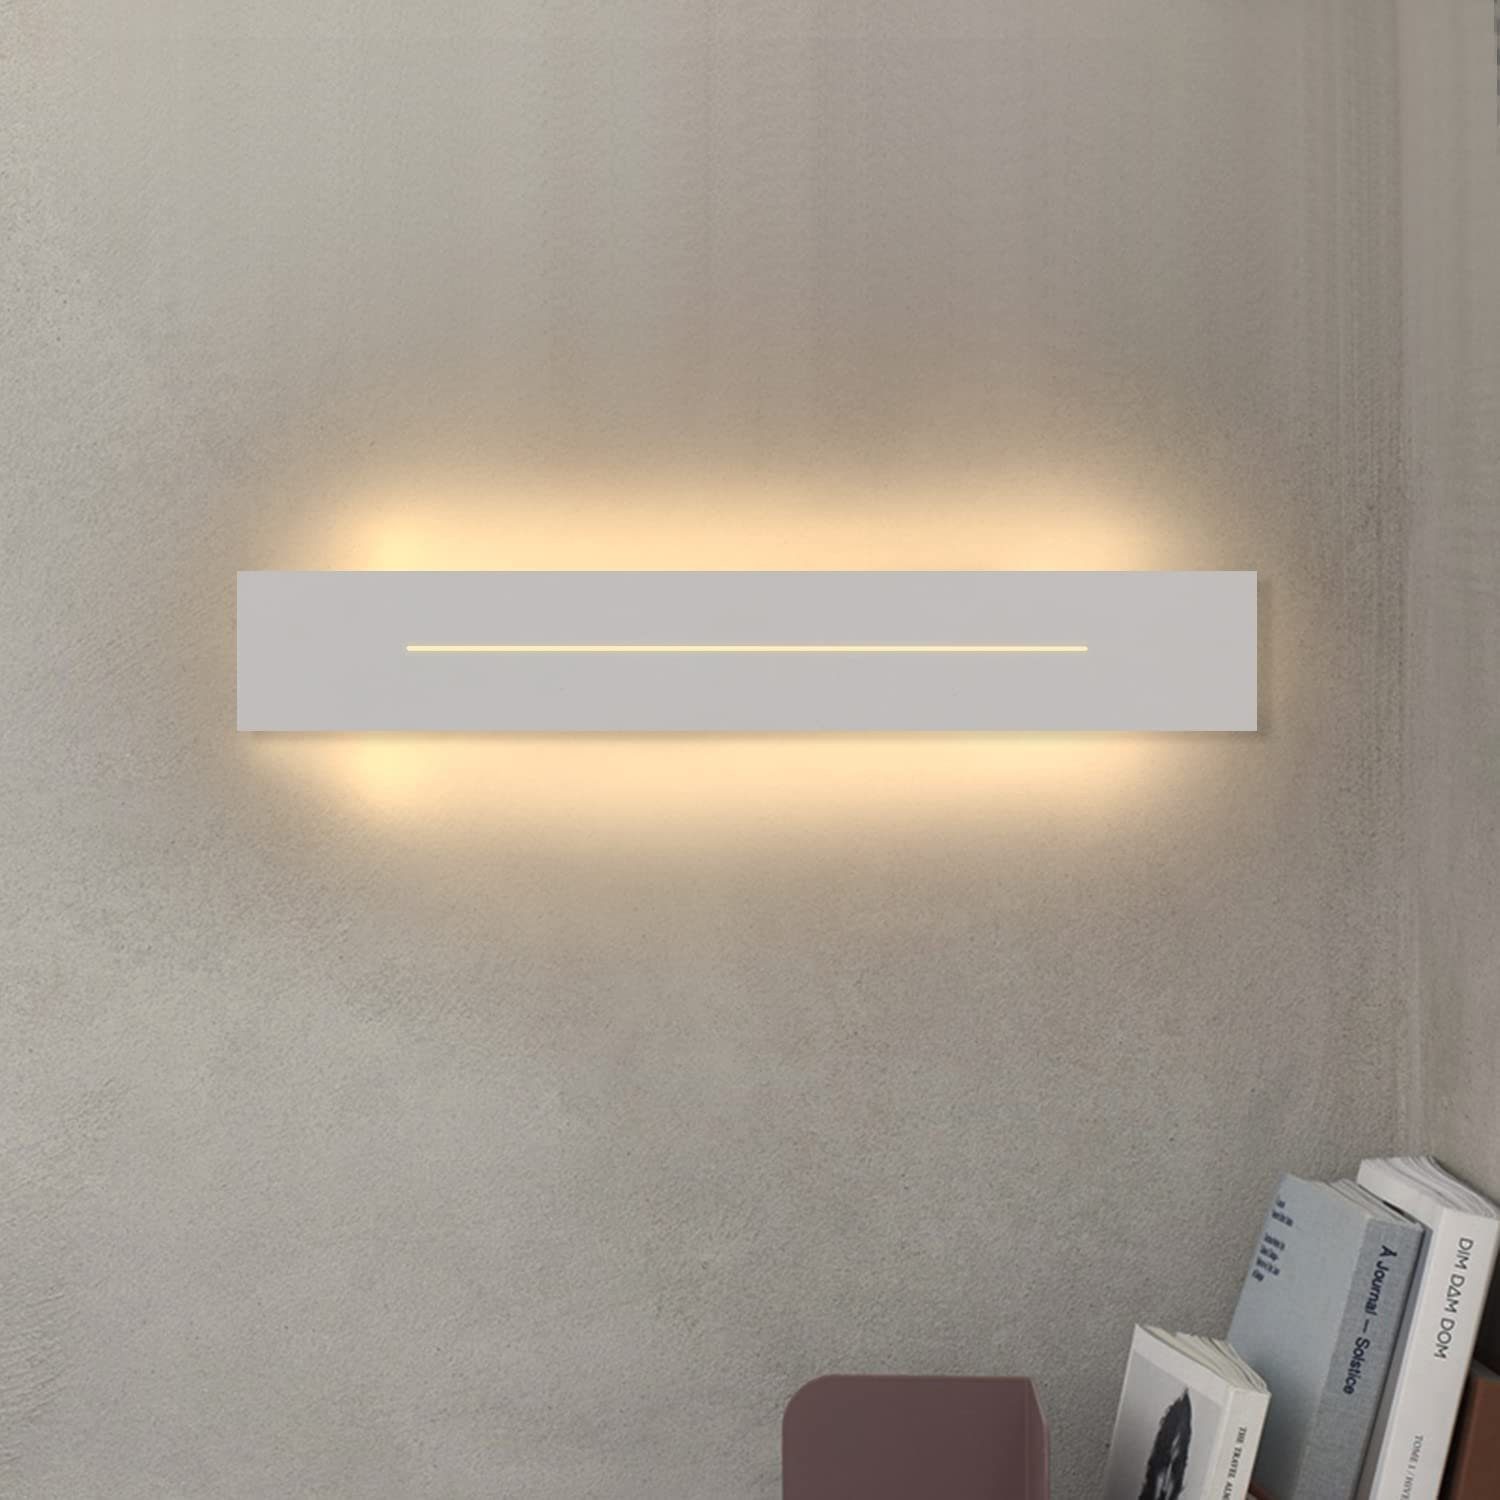 Nettlife LED Wandleuchte innen 30CM Modern Wandlampe Warmweiss Weiß 8W Wandbeleuchtung, LED fest integriert, Warmweiß, für Treppenhaus Schlafzimmer Flur Wohnzimmer Kinderzimmer | Wandleuchten